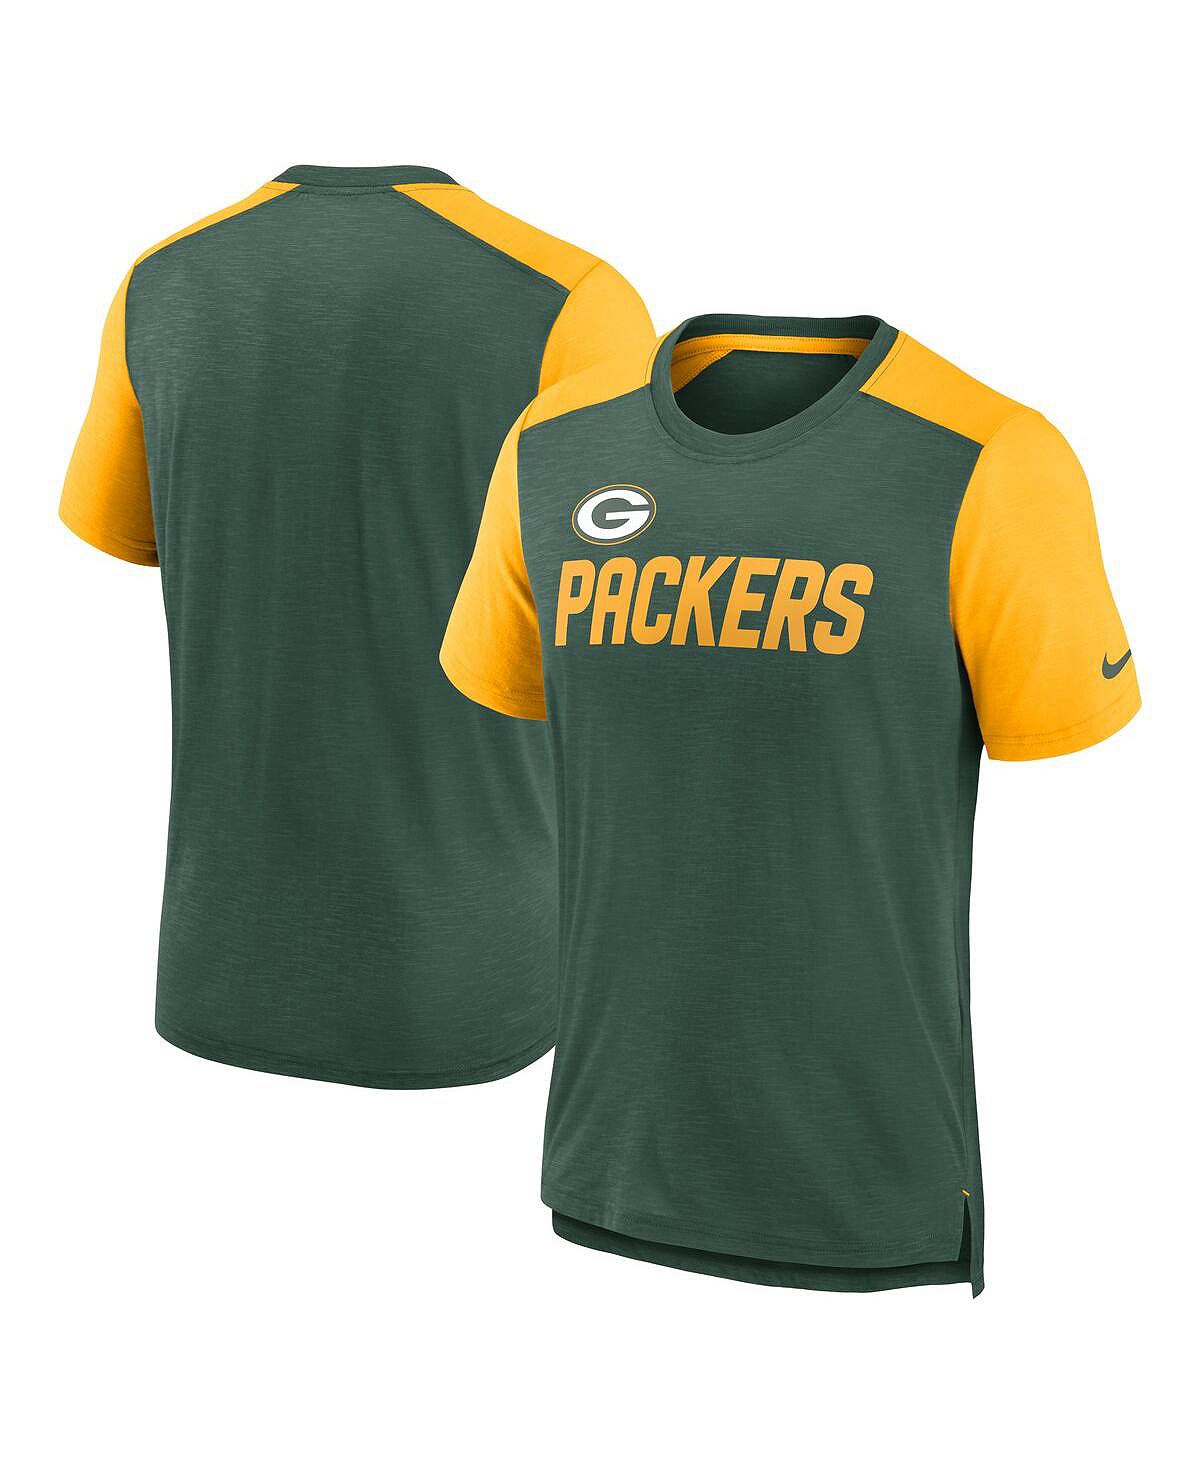 Мужская футболка с названием команды Green Bay Packers в стиле колор-блок, зеленая, золотистая с меланжевым отливом Nike printio лонгслив green bay packers